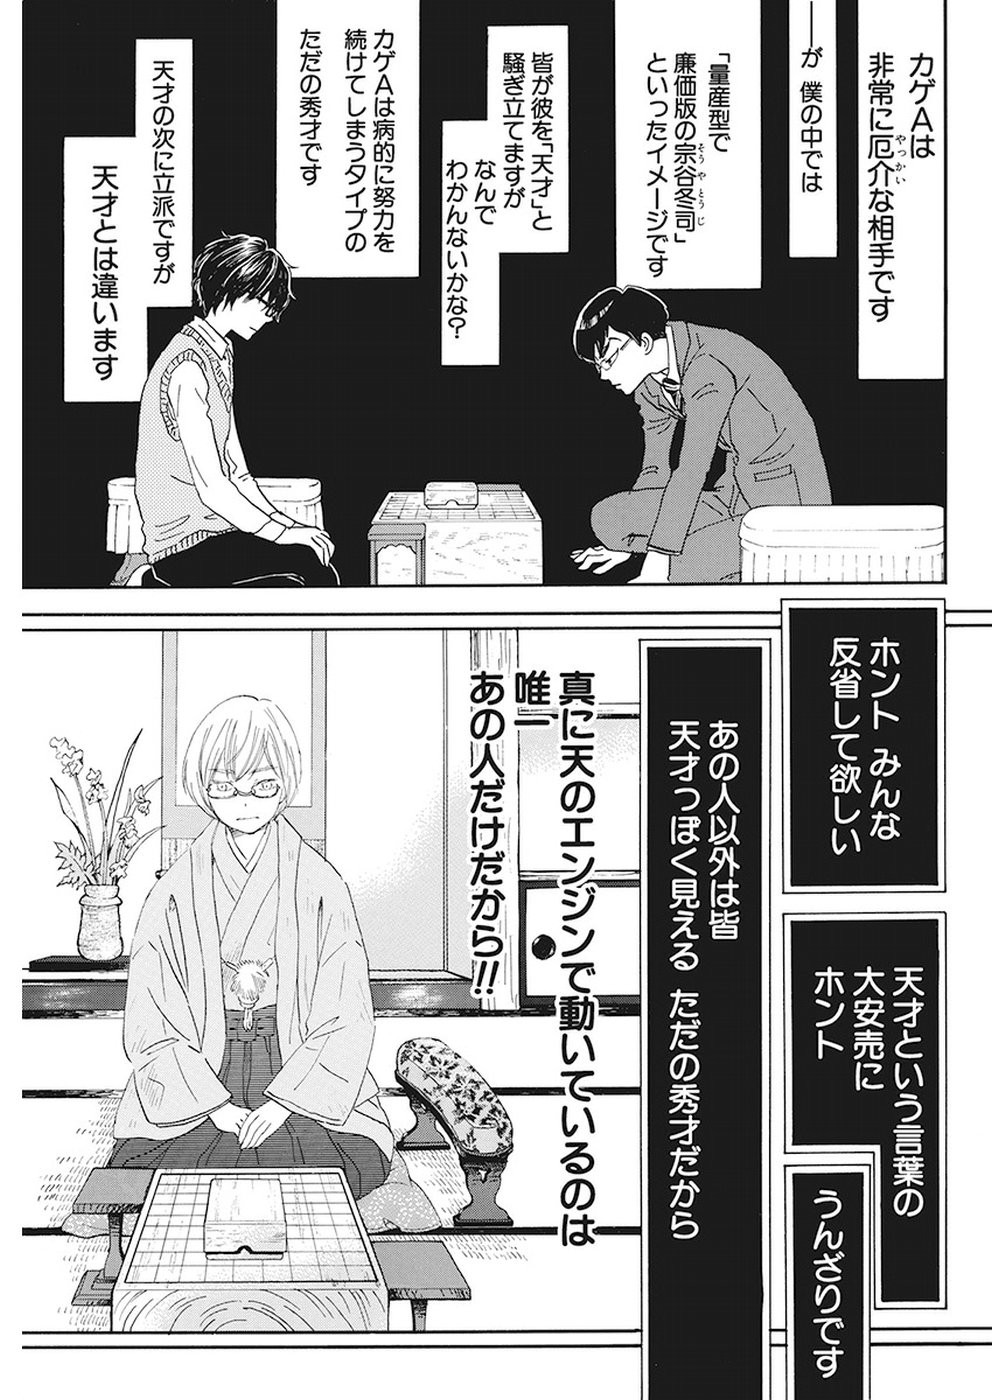 3 Gatsu no Lion - Chapter 157 - Page 7